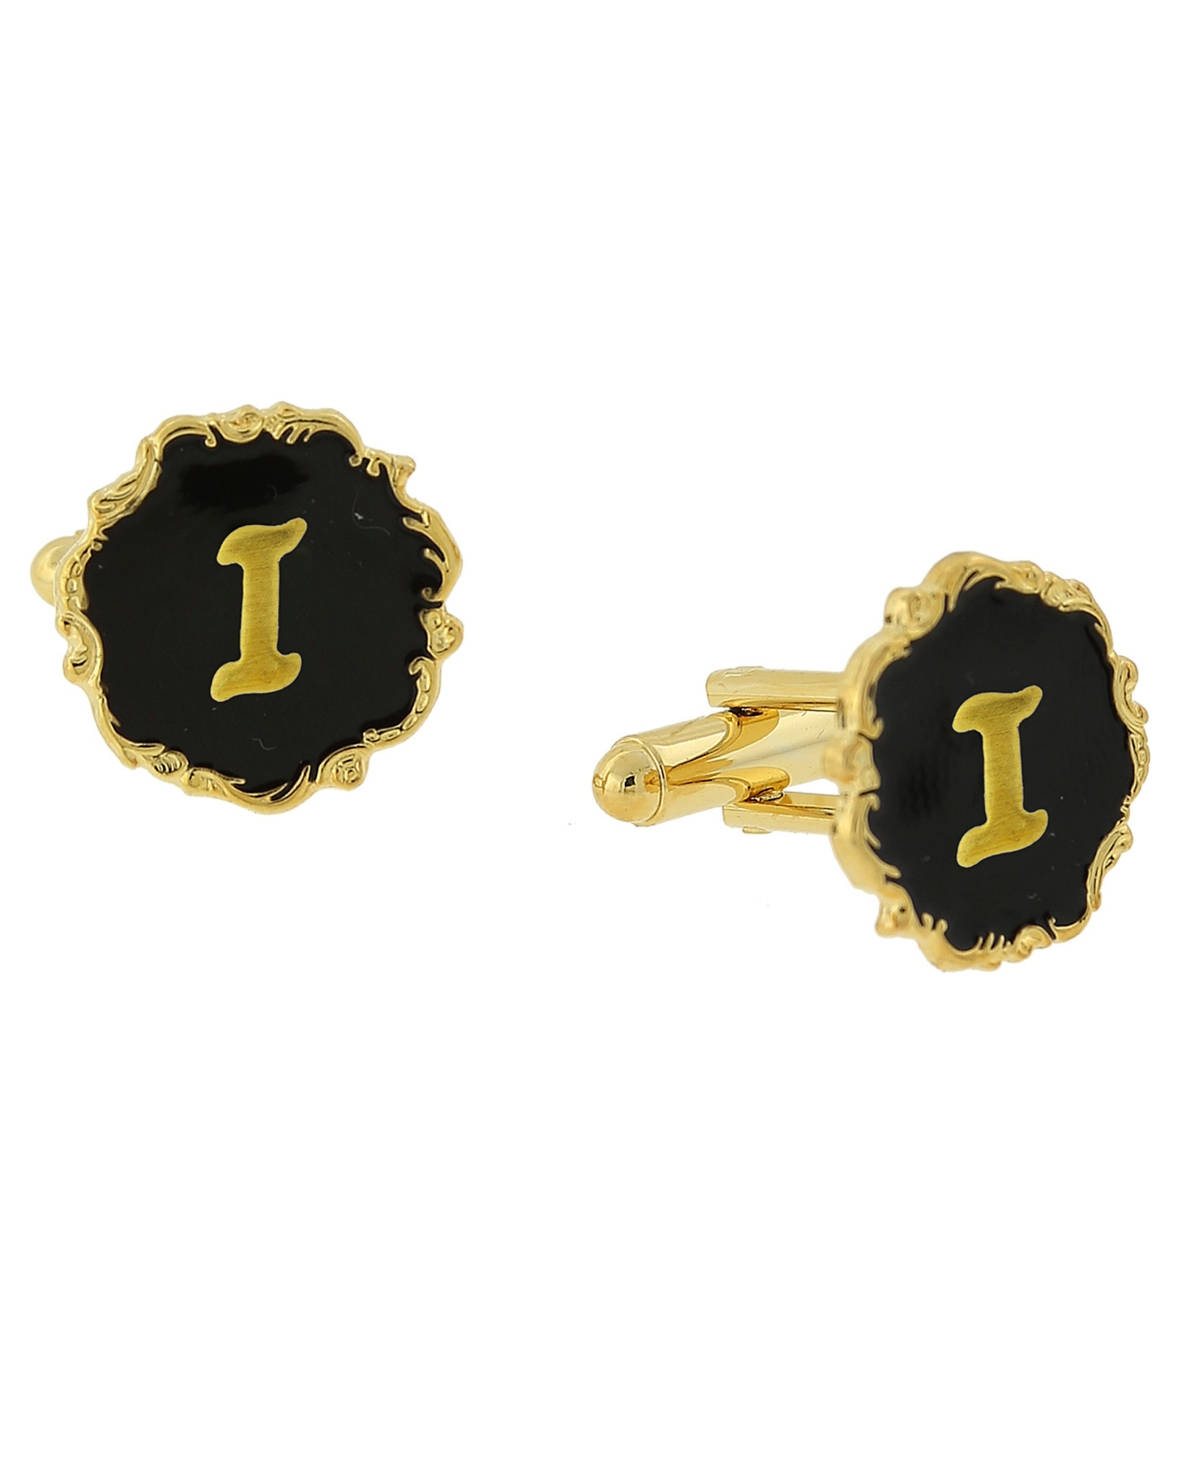 Jewelry 14K Gold-Plated Enamel Initial I Cufflinks - Black